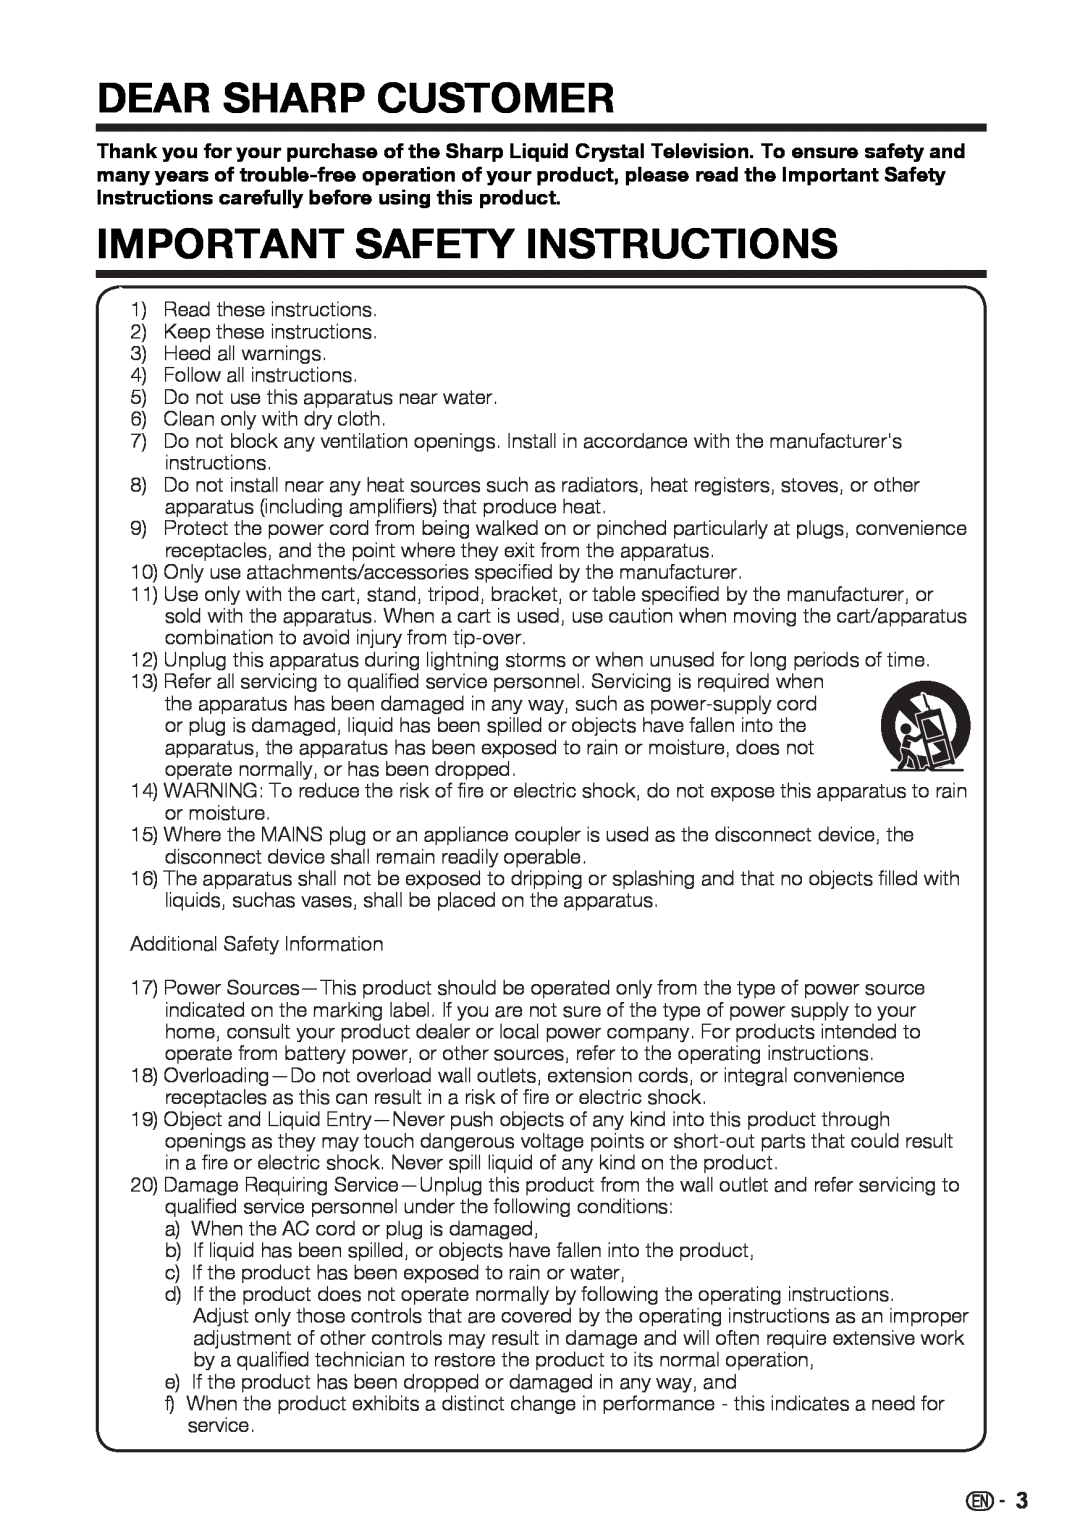 Sharp LC-46SV50U, LC-32SV40U, LC-42SV50U operation manual Dear Sharp Customer, Important Safety Instructions 